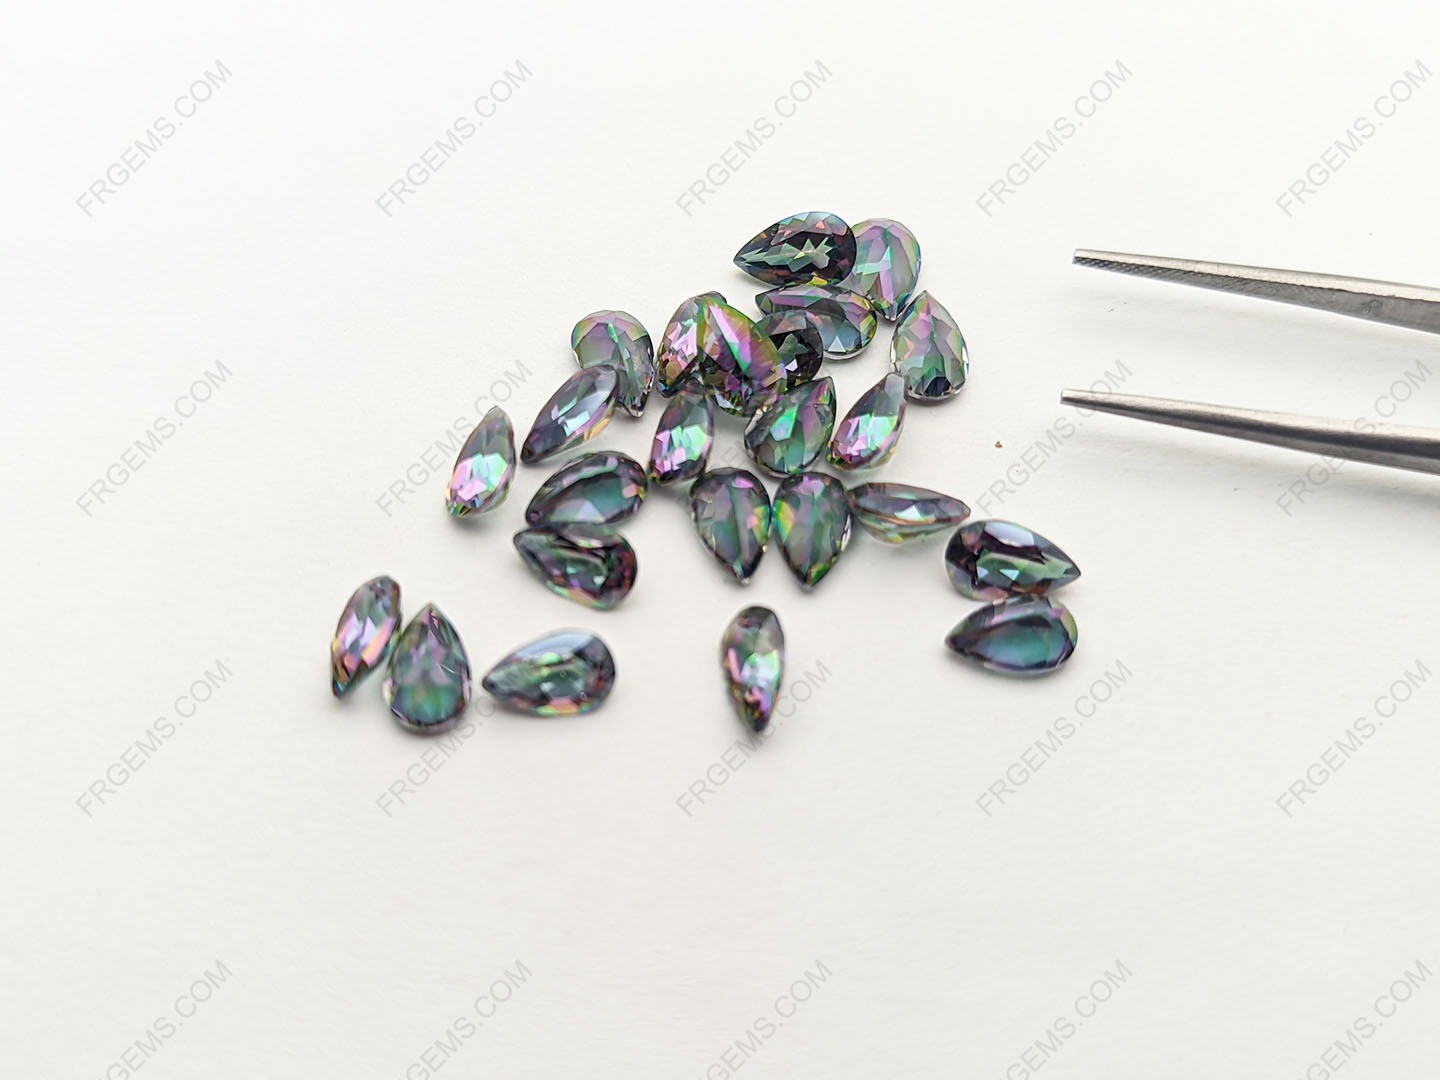 Bulk Wholesale Mystic Topaz Loose Genuine Natural Pear shape 8x5mm faceted Gemstones